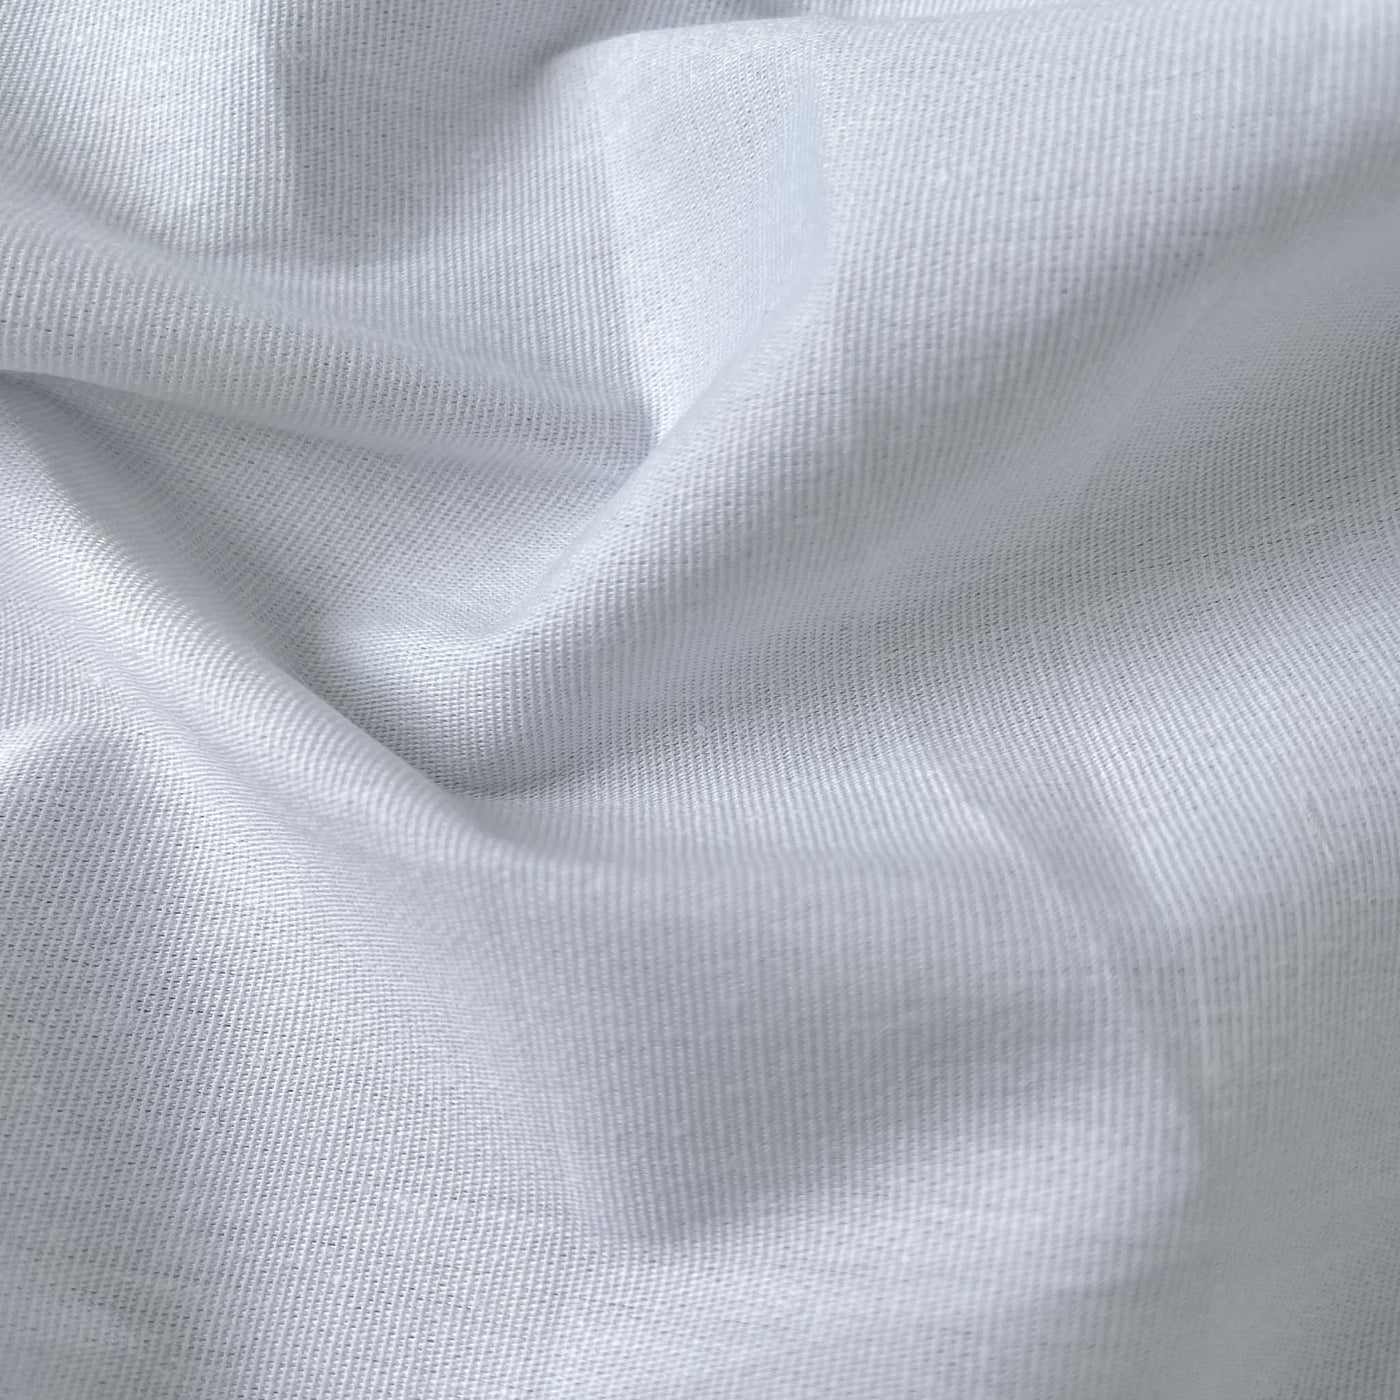 Dyeable Fabric Cut Piece 1 MTR (CUT PIECE) White Dyeable Pure Cotton Lycra Plain Fabric (Width 45 Inches, 155 Gms)